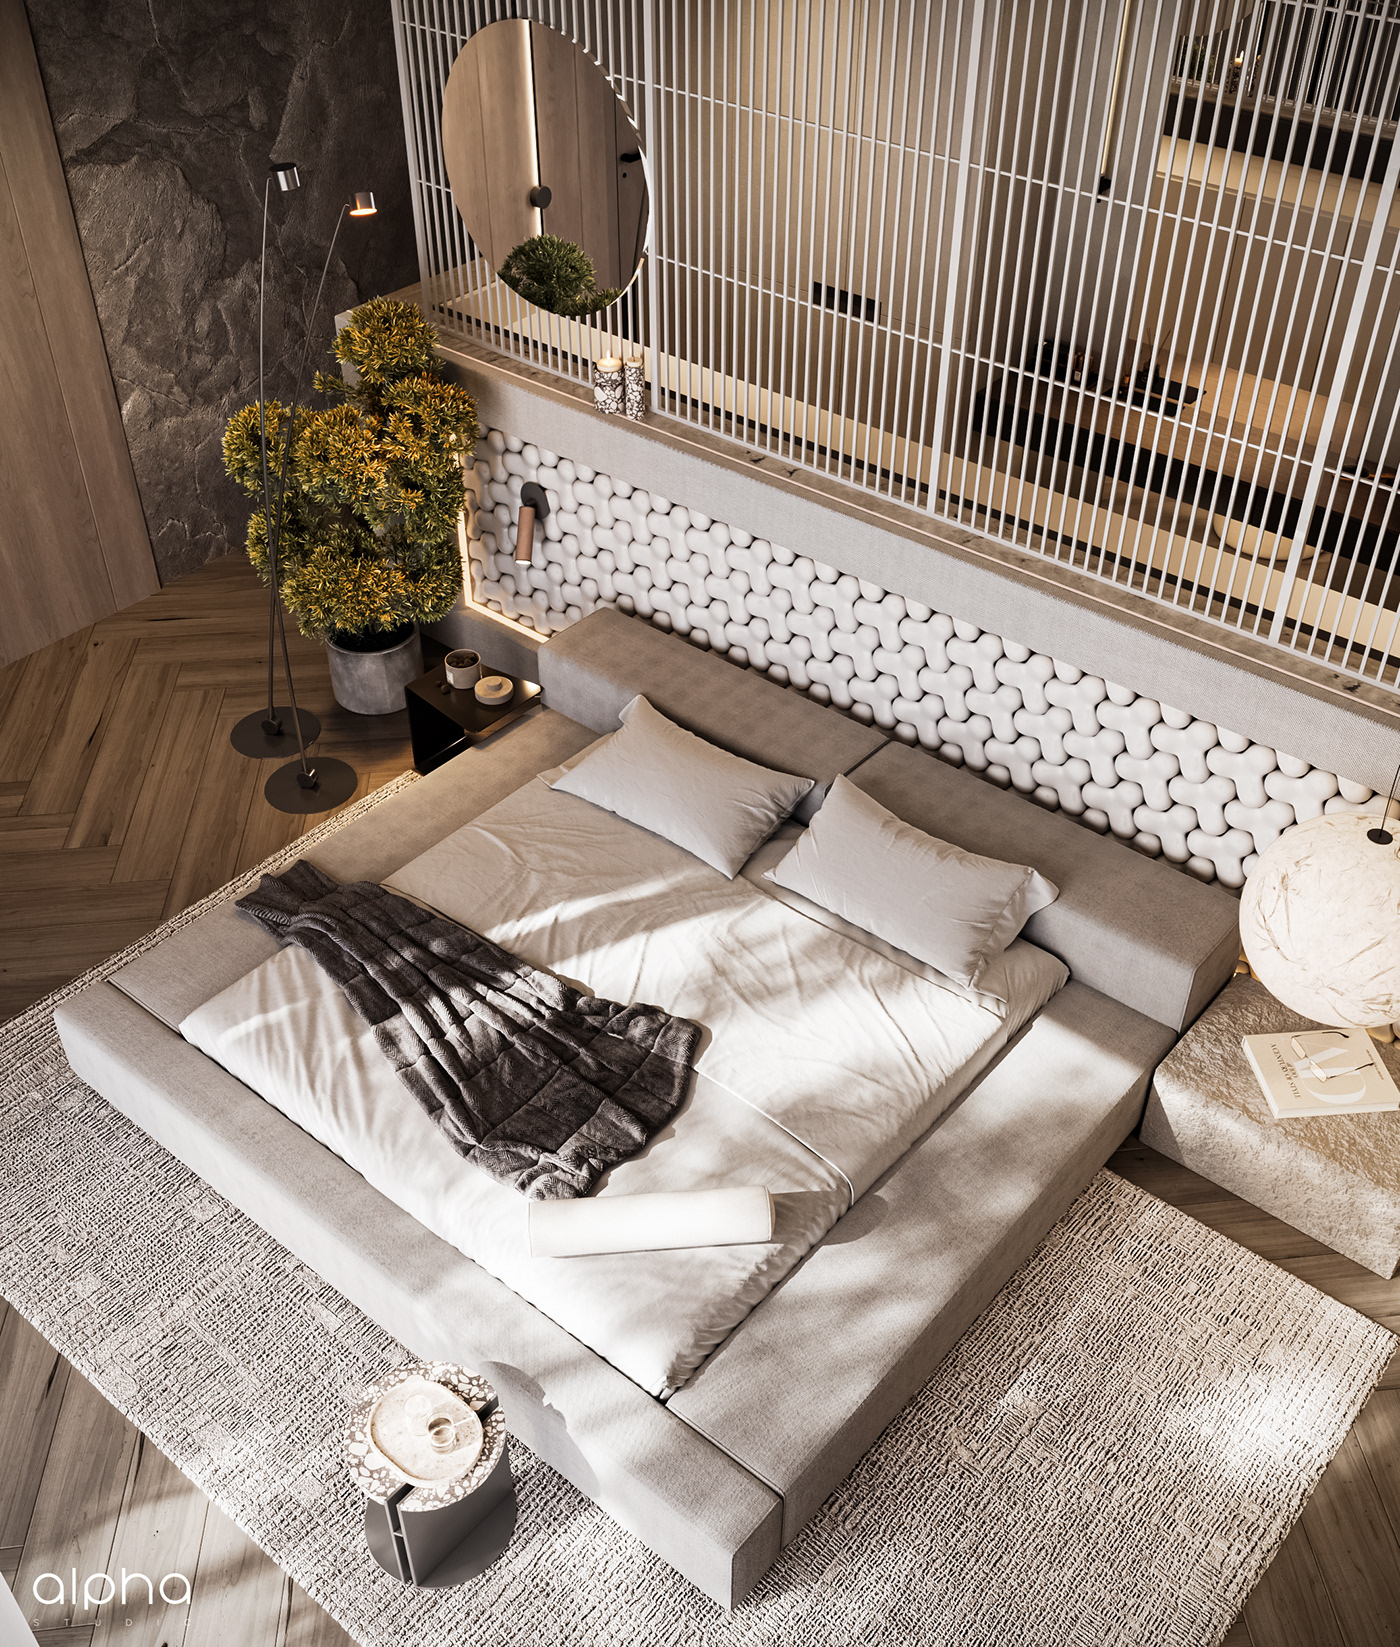 master bedroom interior design  Alpha design architecture cozy bedroom modern visualization corona